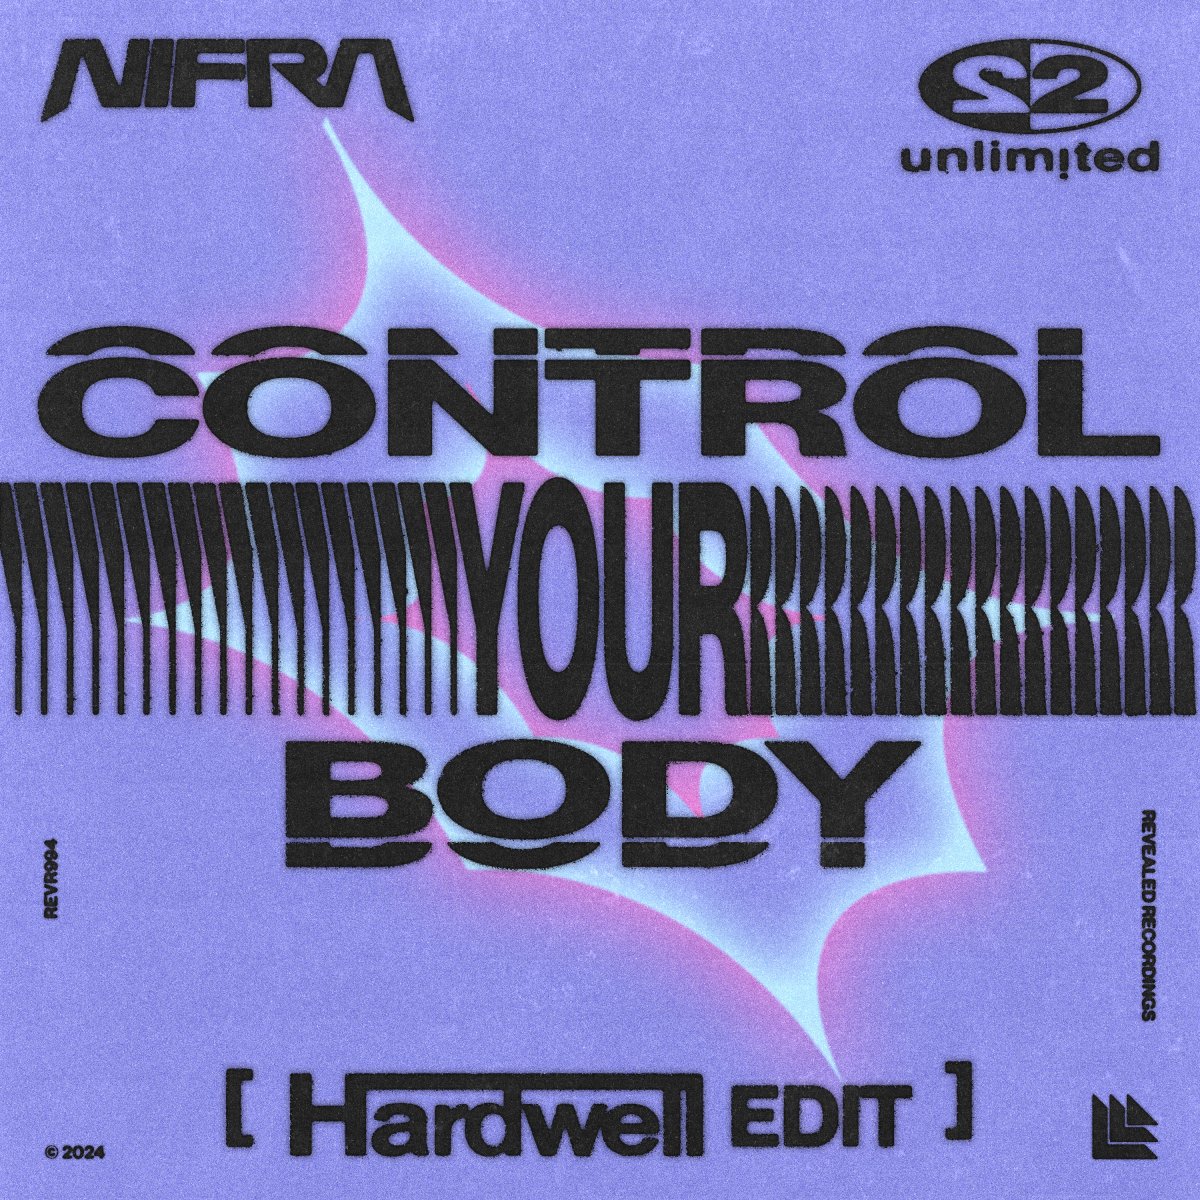 Control Your Body (Hardwell Edit) - Nifra ⁠ & 2 Unlimited ⁠ Hardwell⁠ 